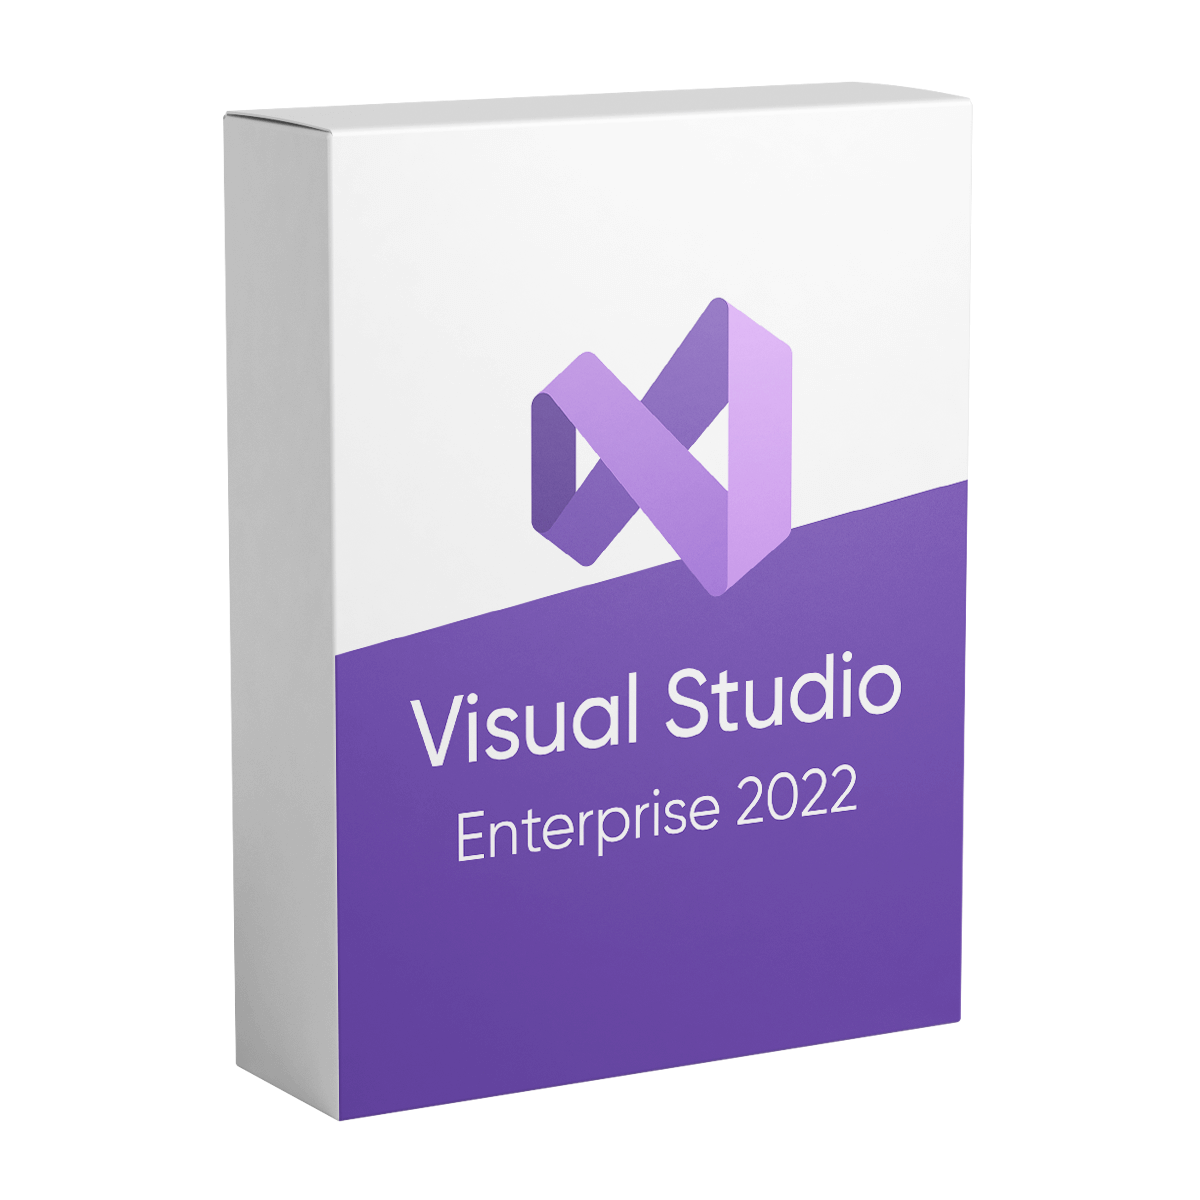 Visual Studio Enterprise 2022 - Lifetime License for 1 PC